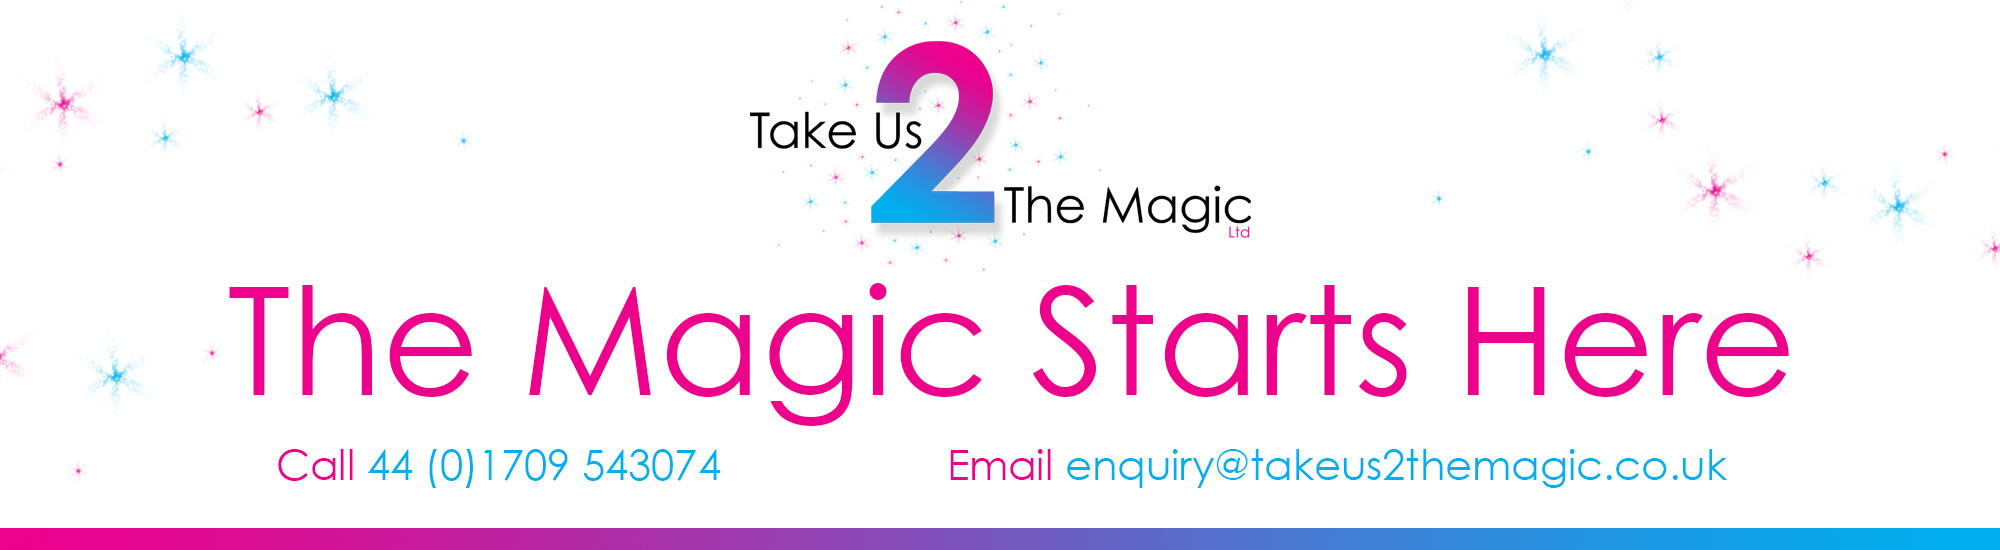 Take Us 2 The Magic - The Magic Starts Here